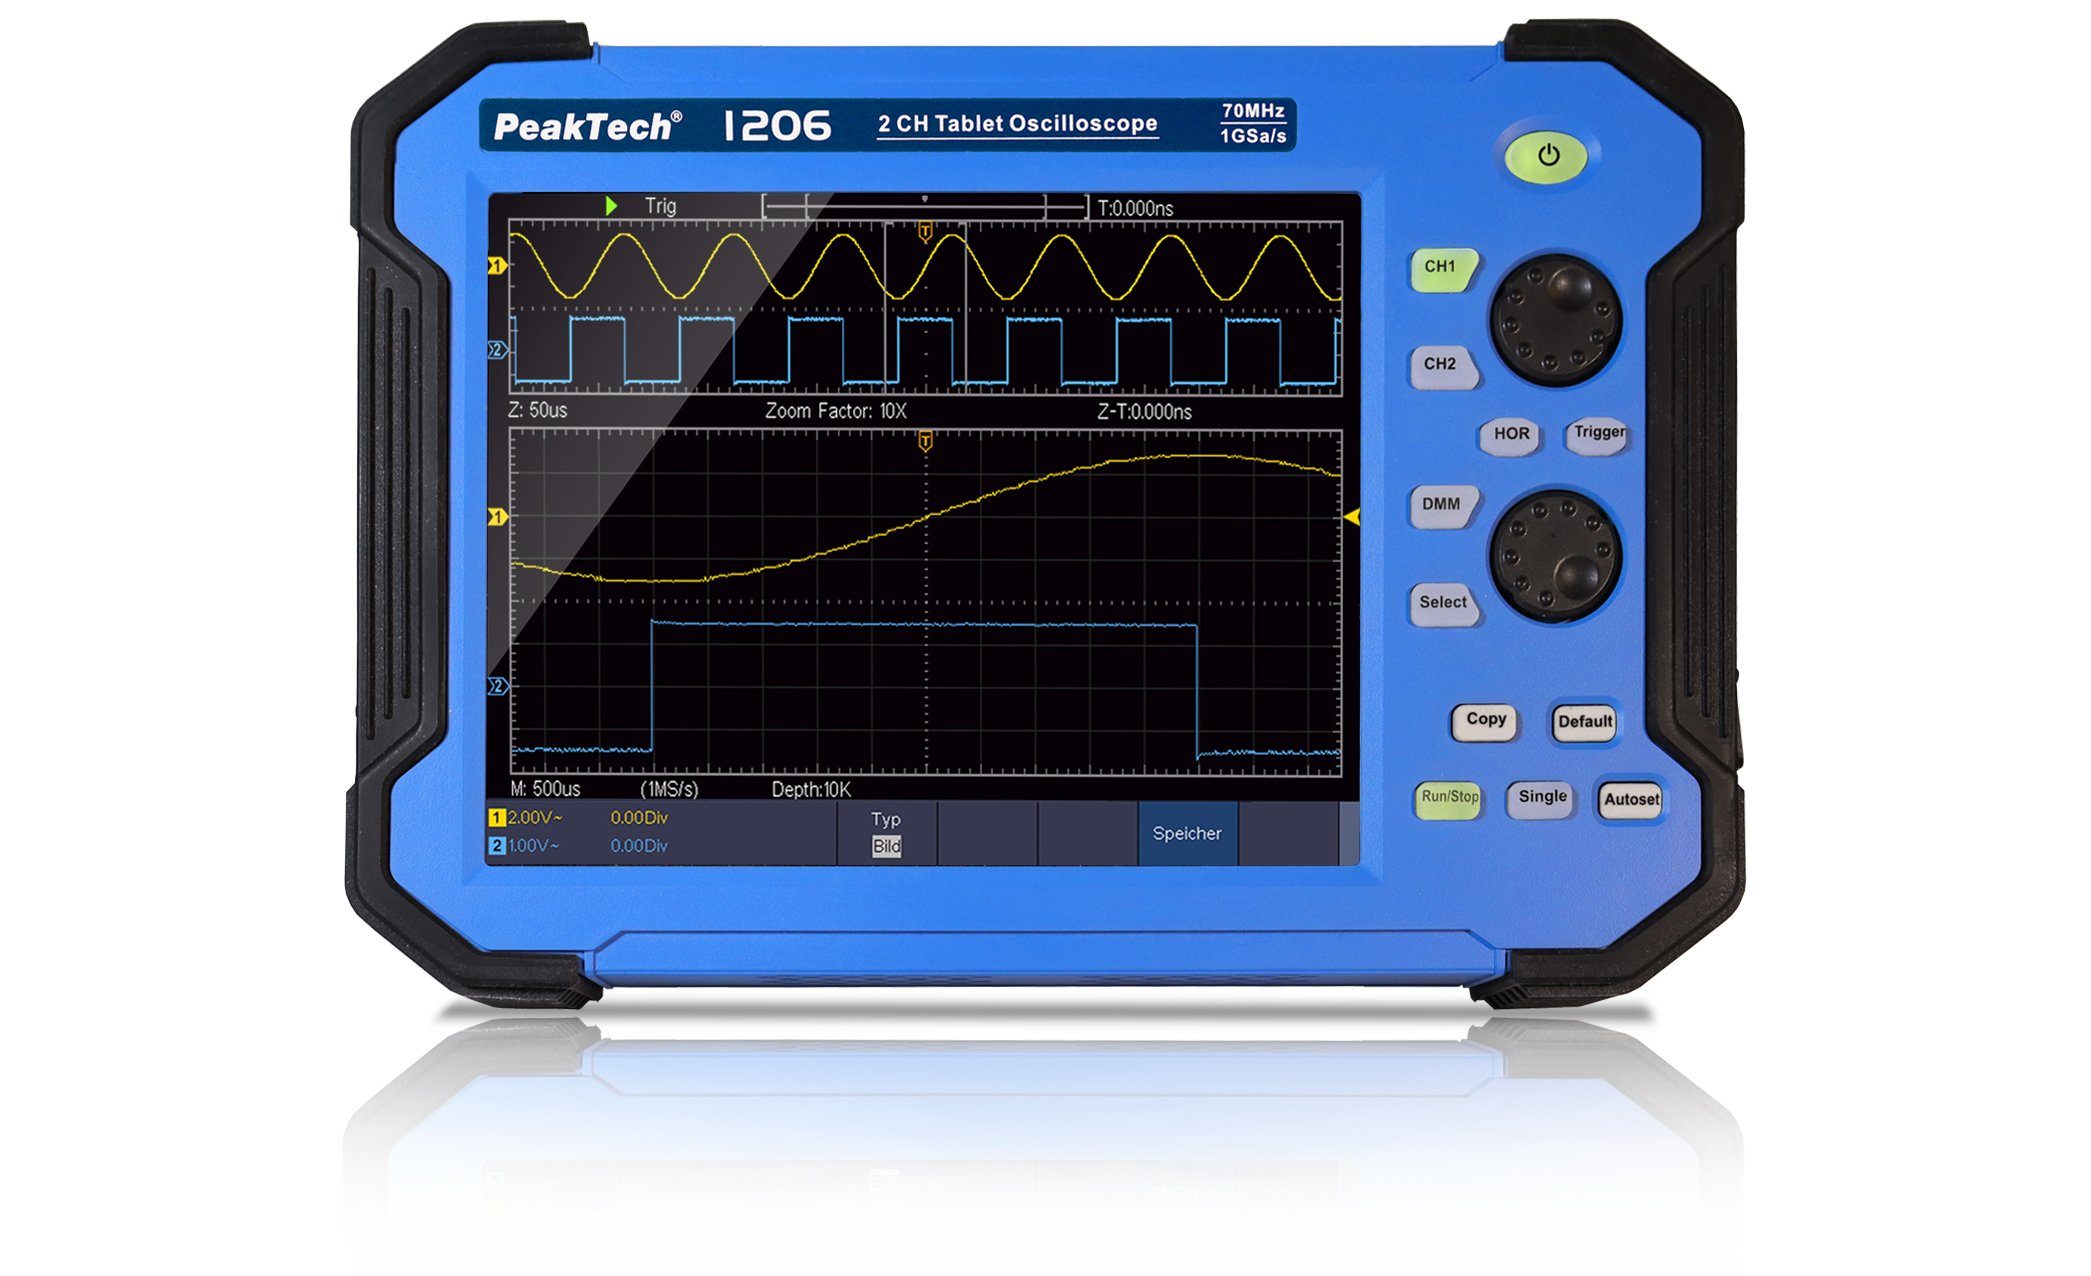 PeakTech PeakTech 1 / Touchscreen Oszilloskop Spannungsprüfer 2 1206: MHz 70 CH, Tablet GS/s